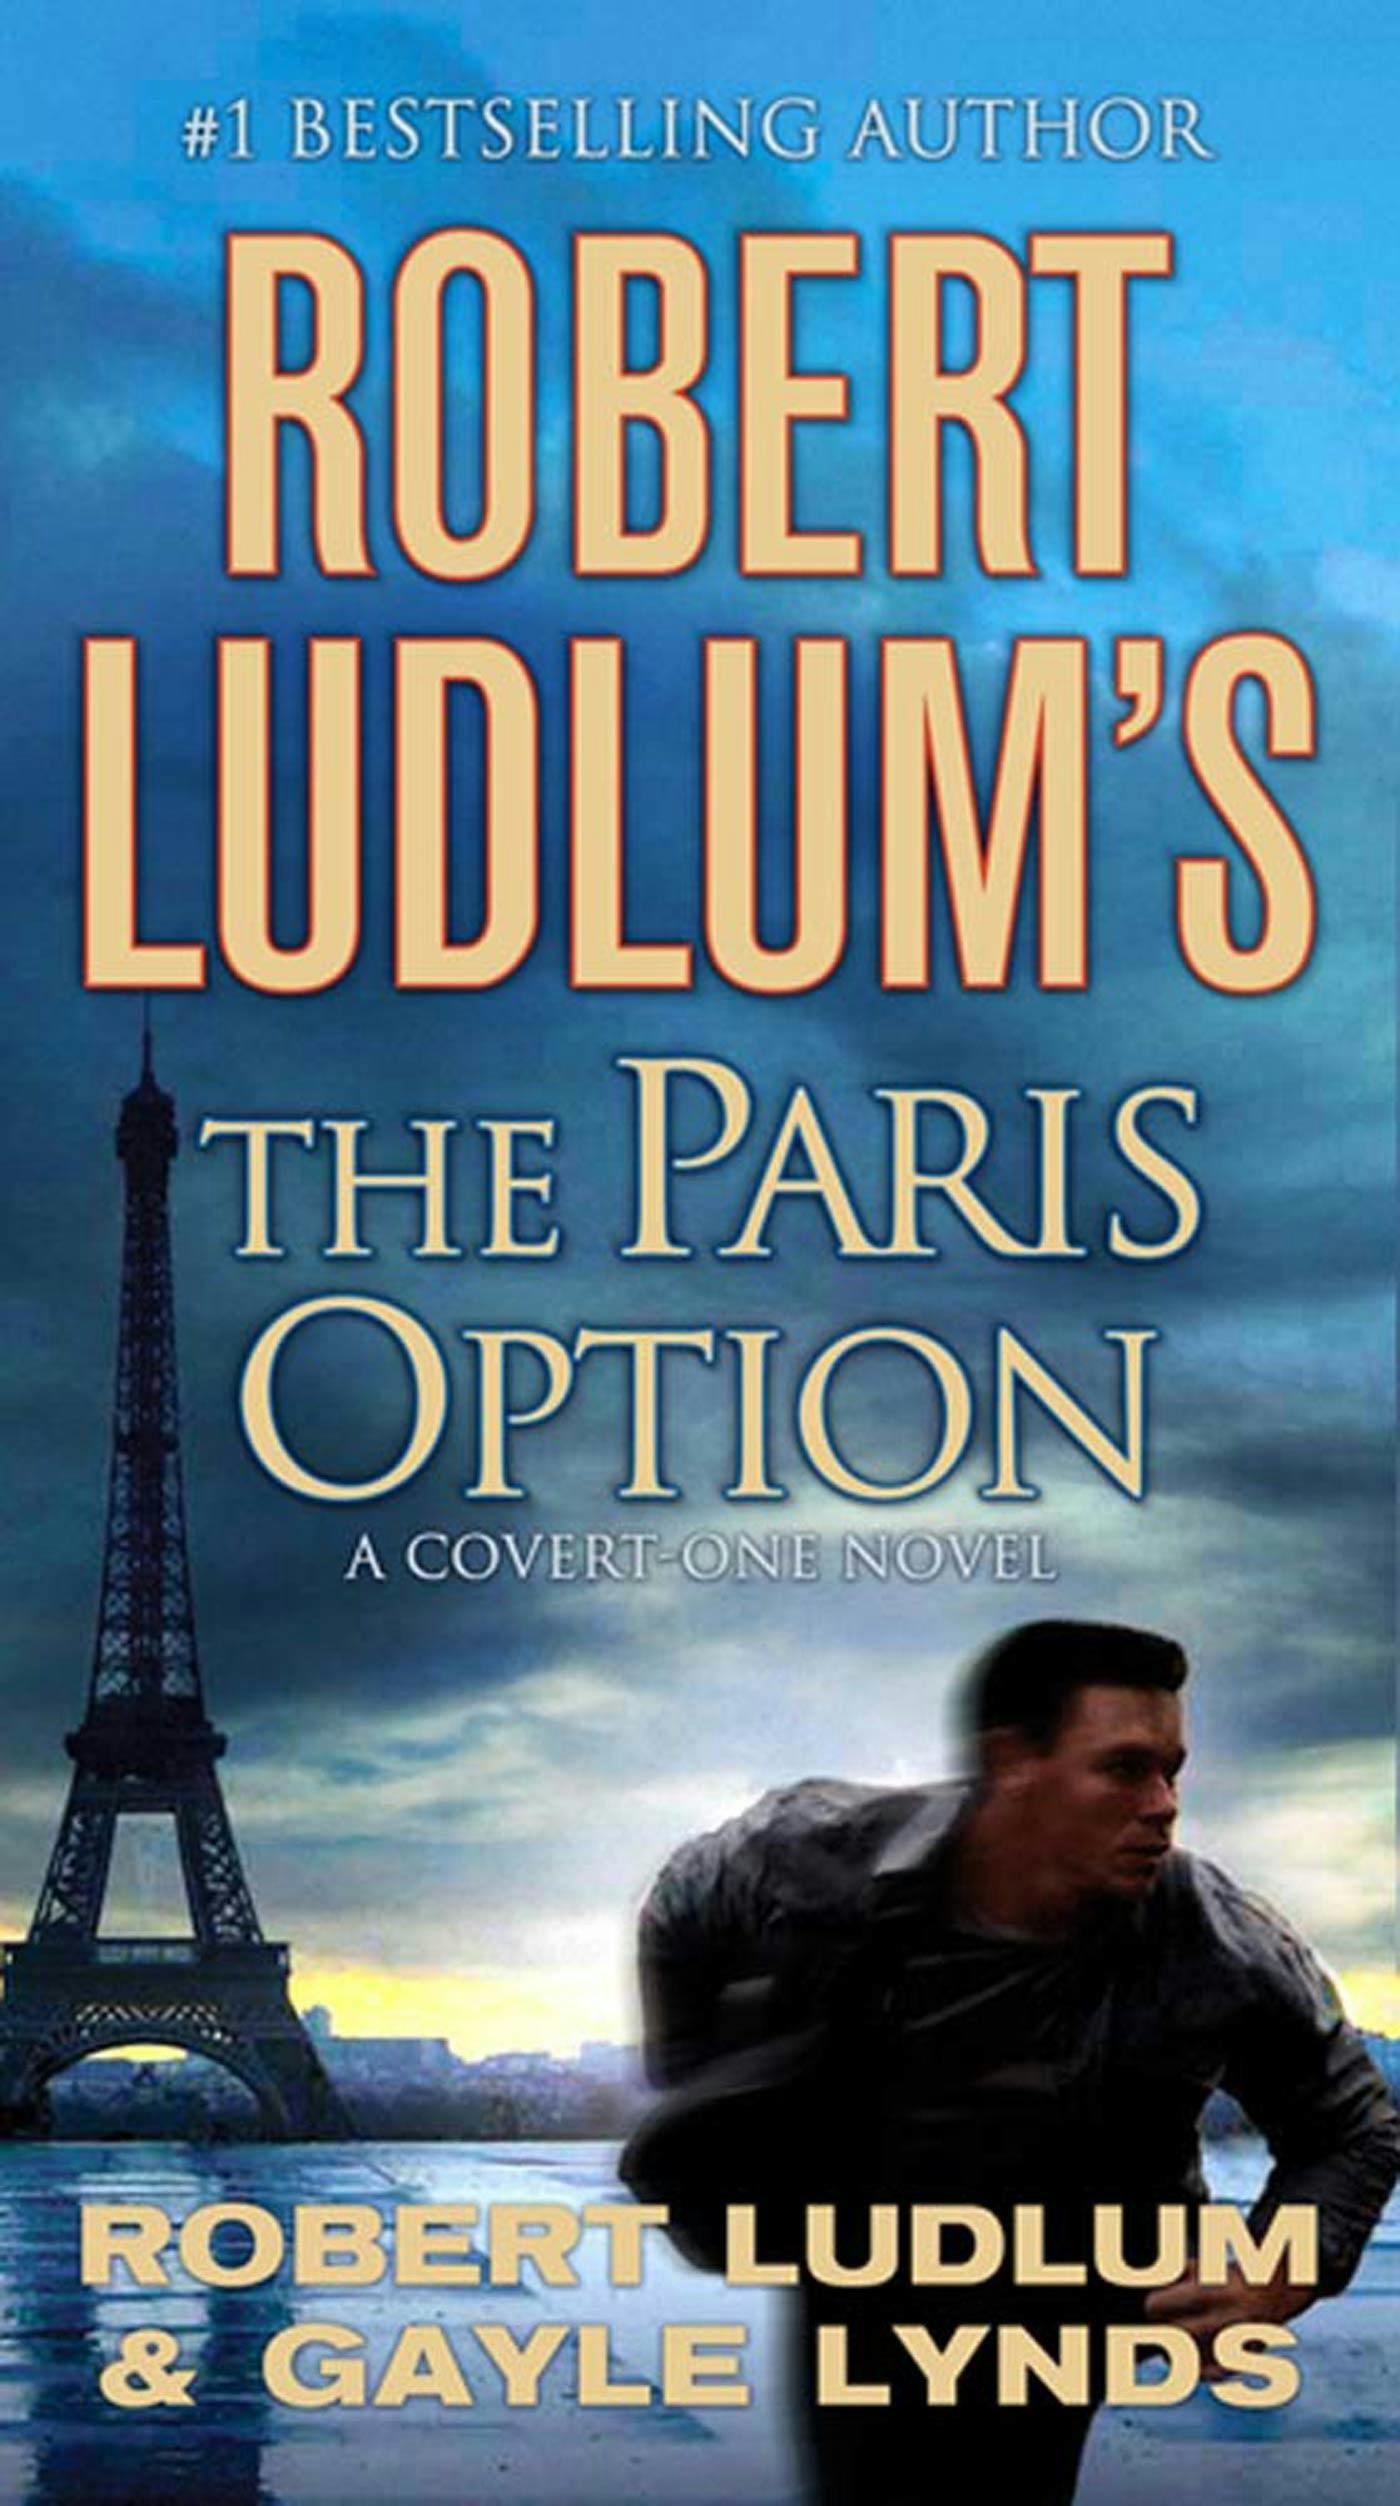 voted best robert ludlum books